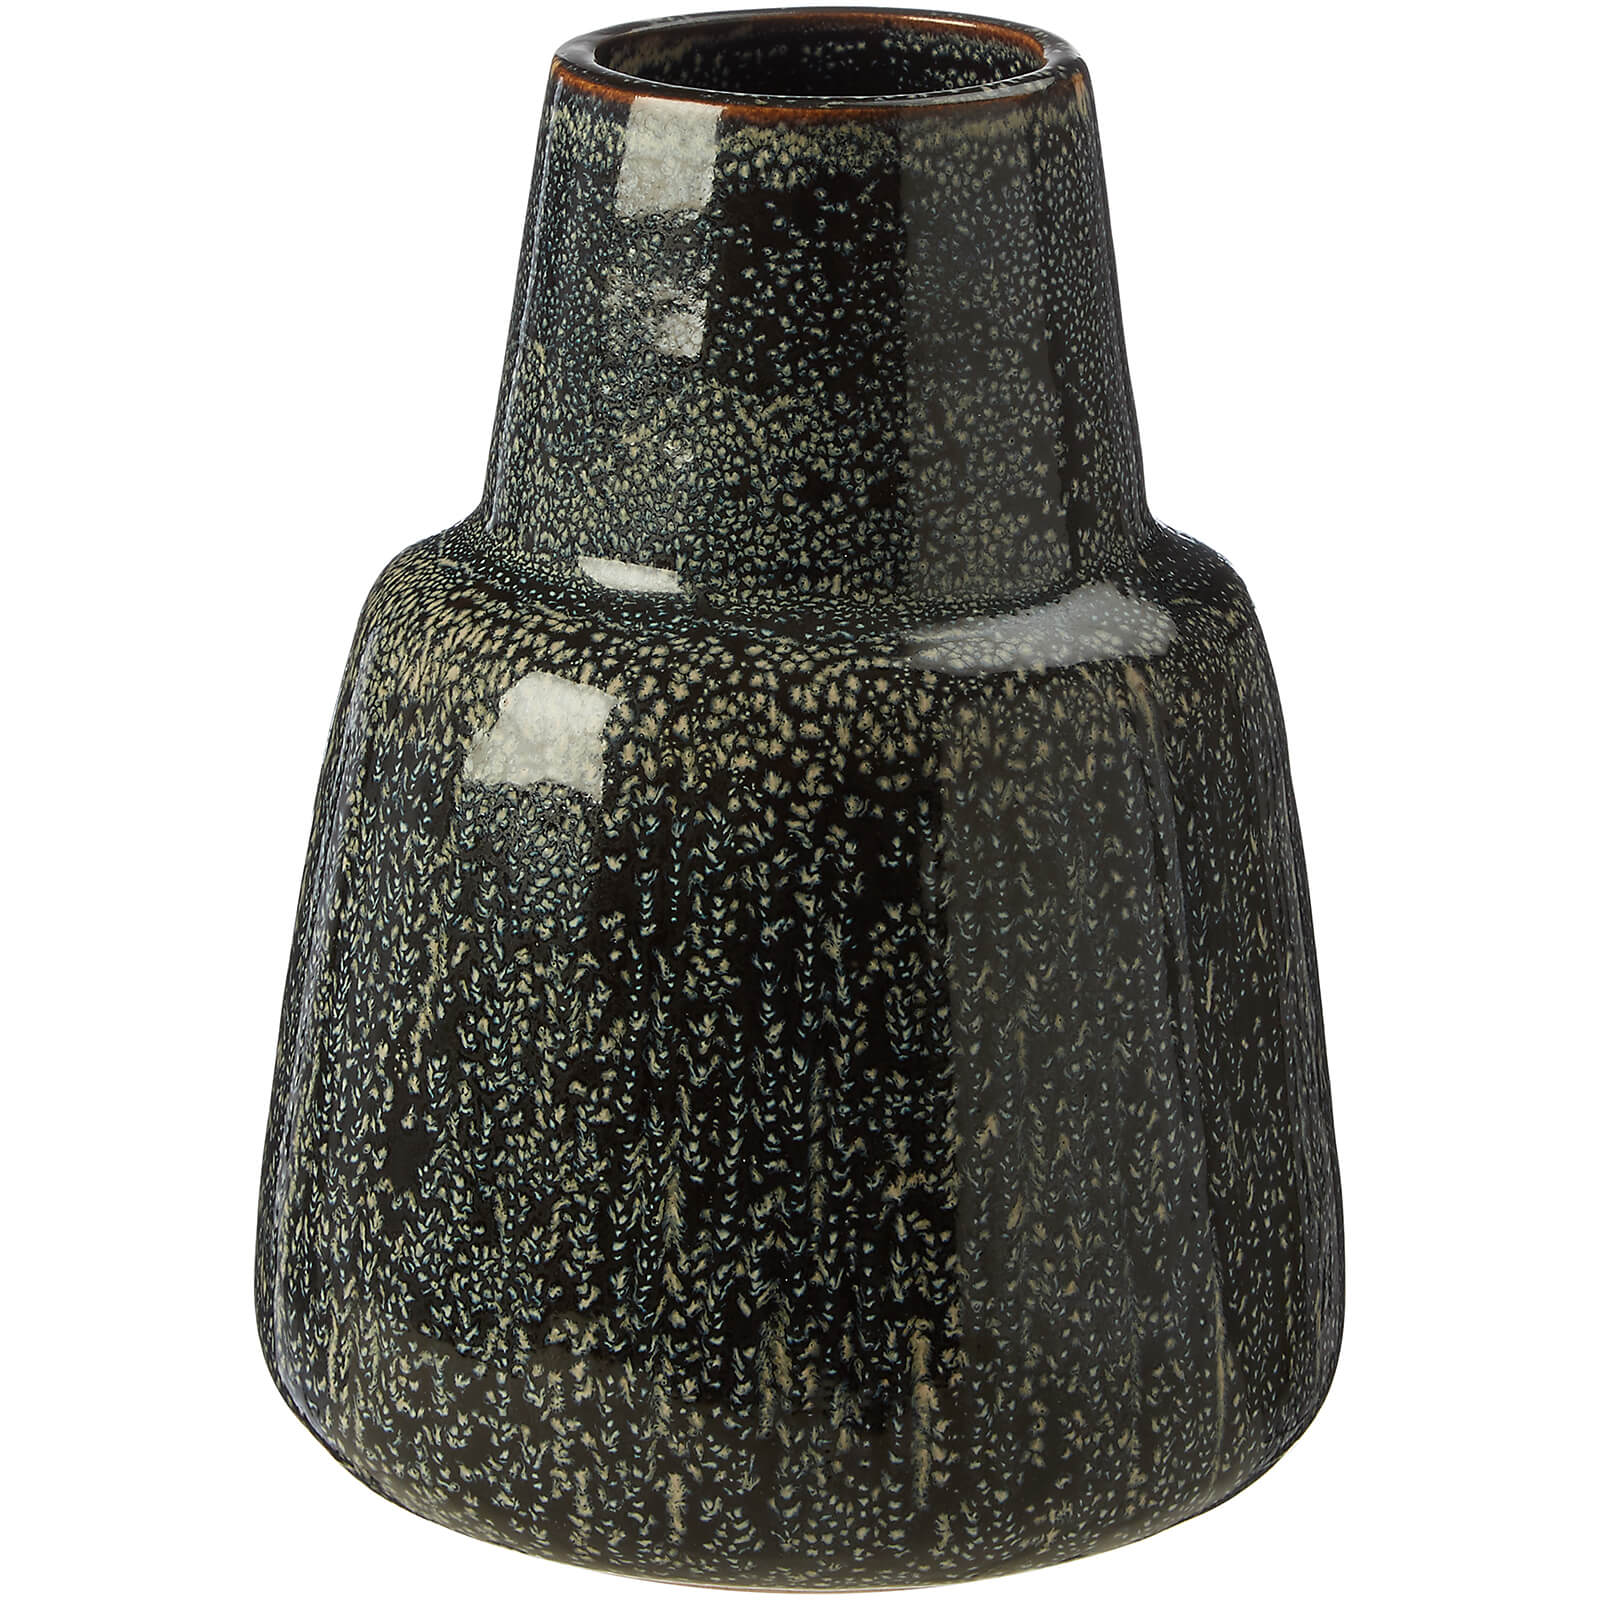 Image of Blue Speckled Kondo Vase - Small